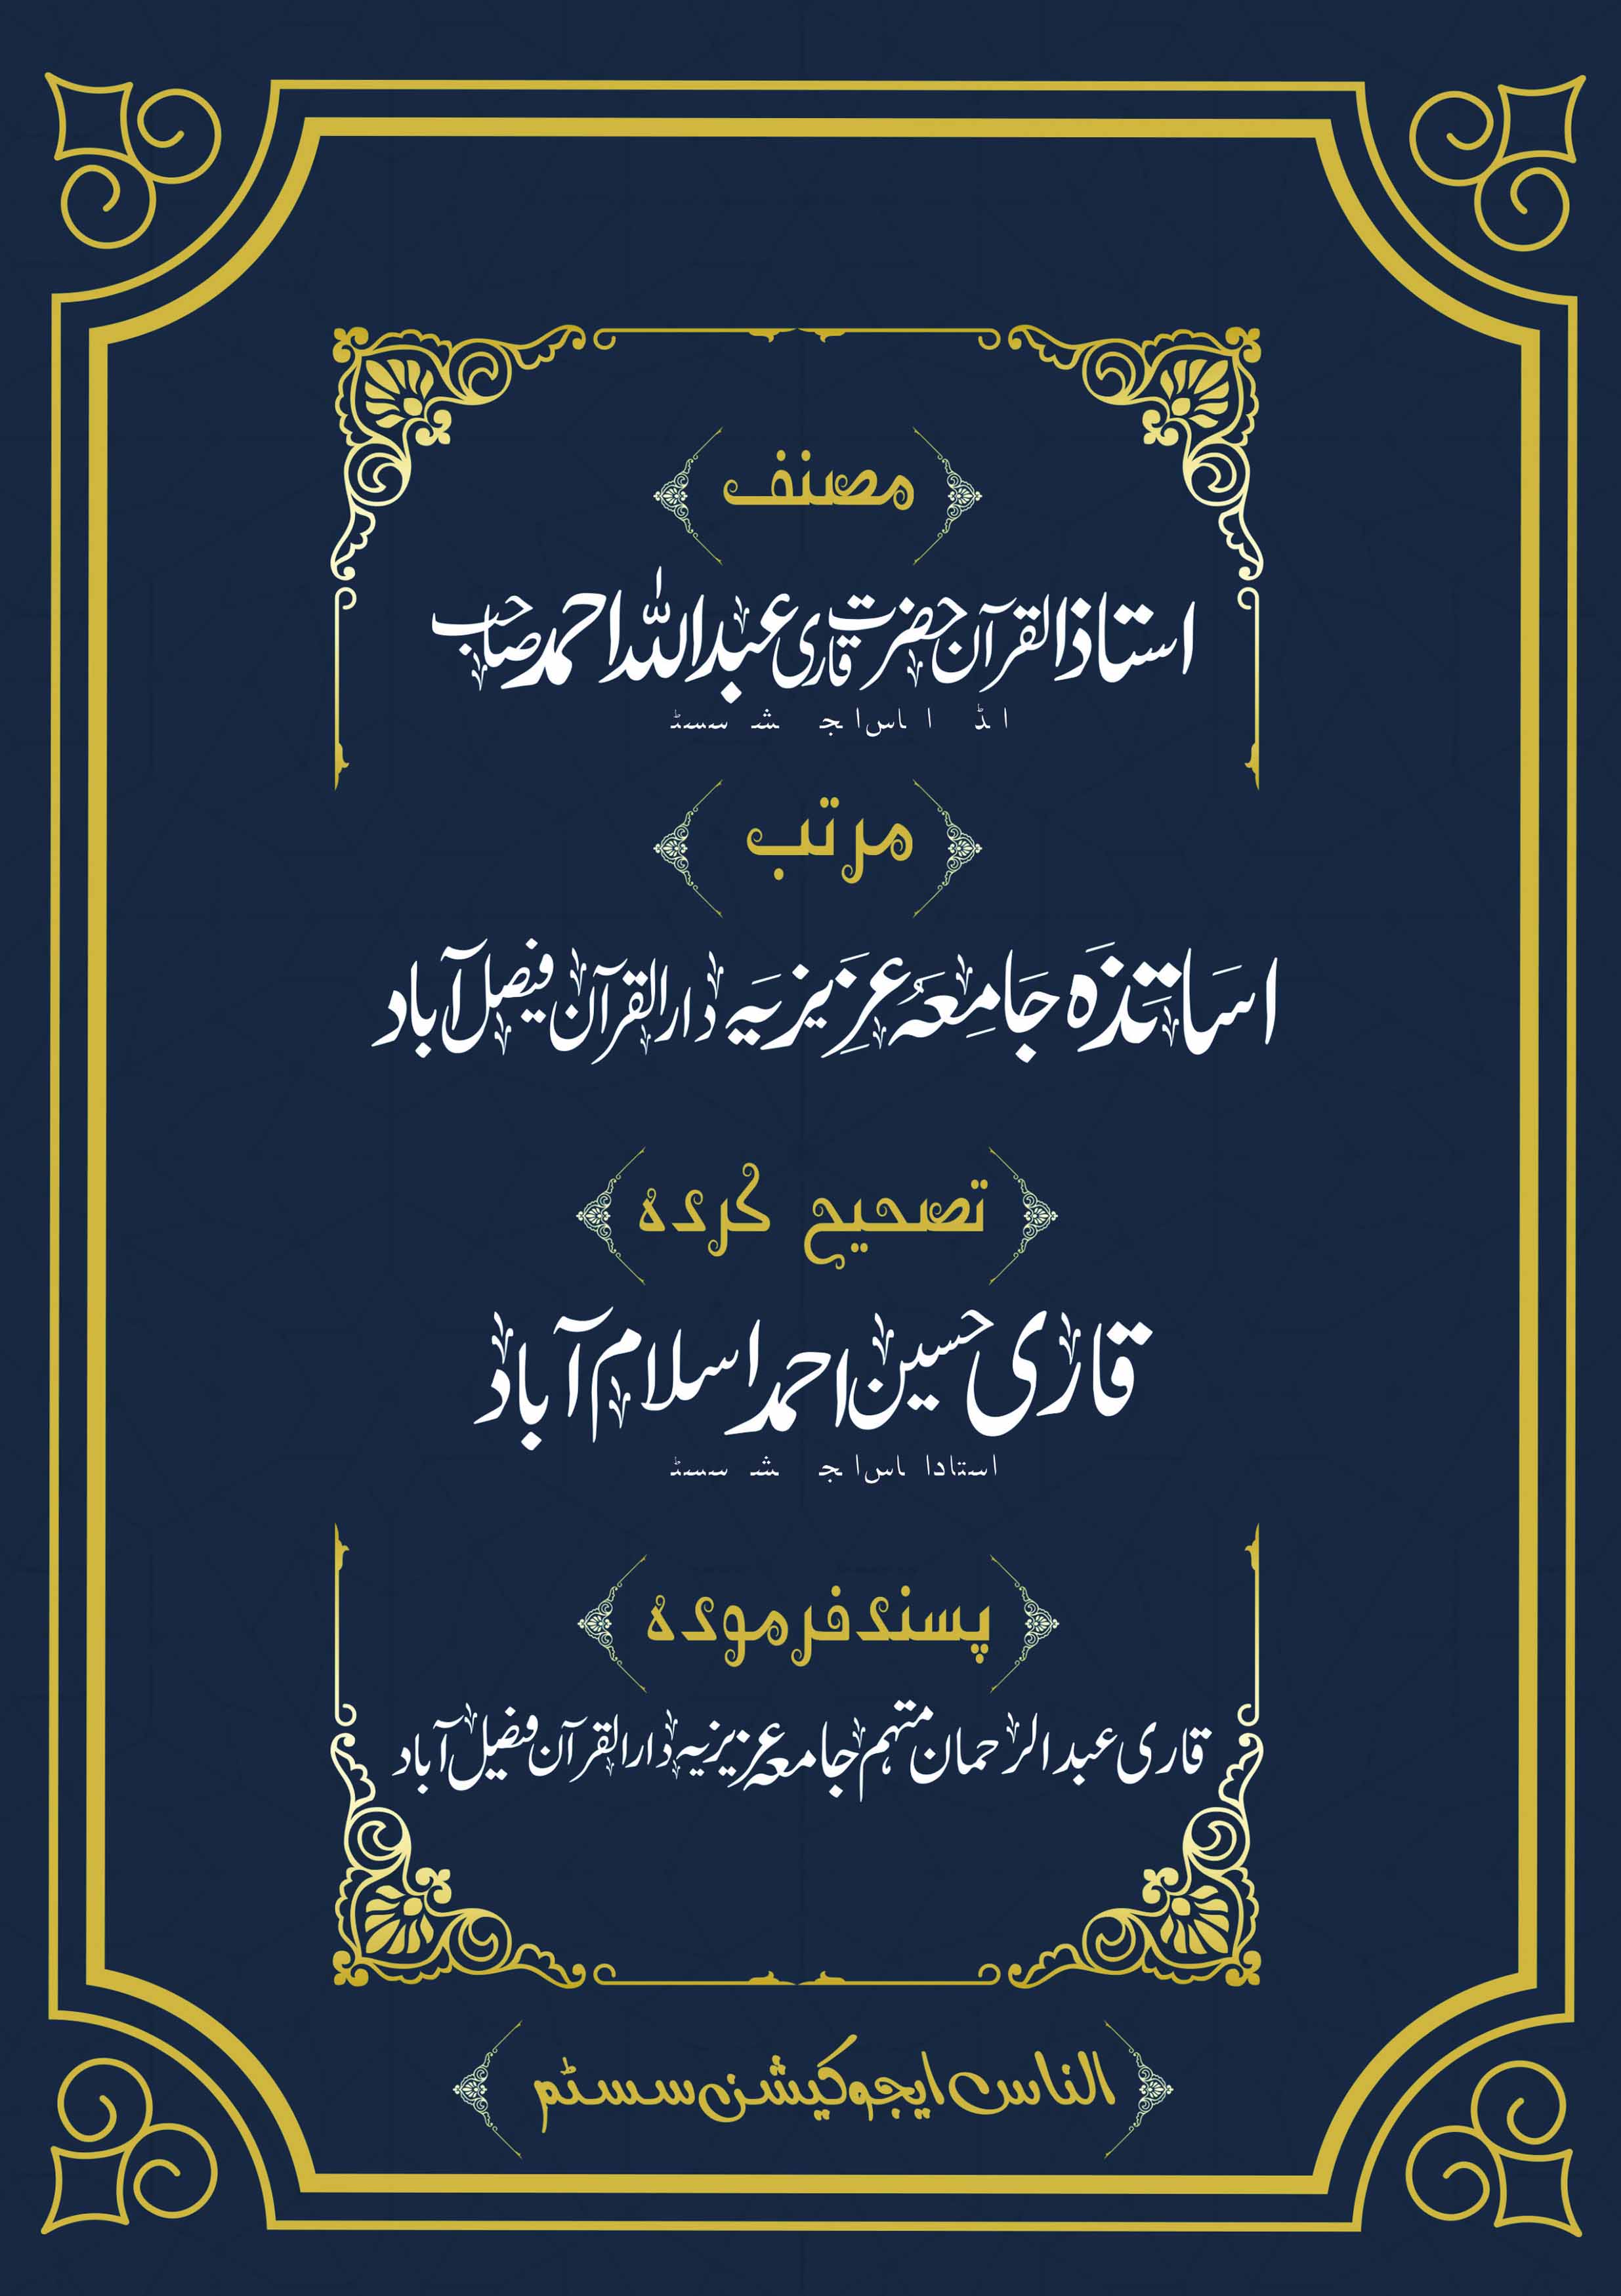 Read Namaz (Salah) Page No 19, Practice Quran